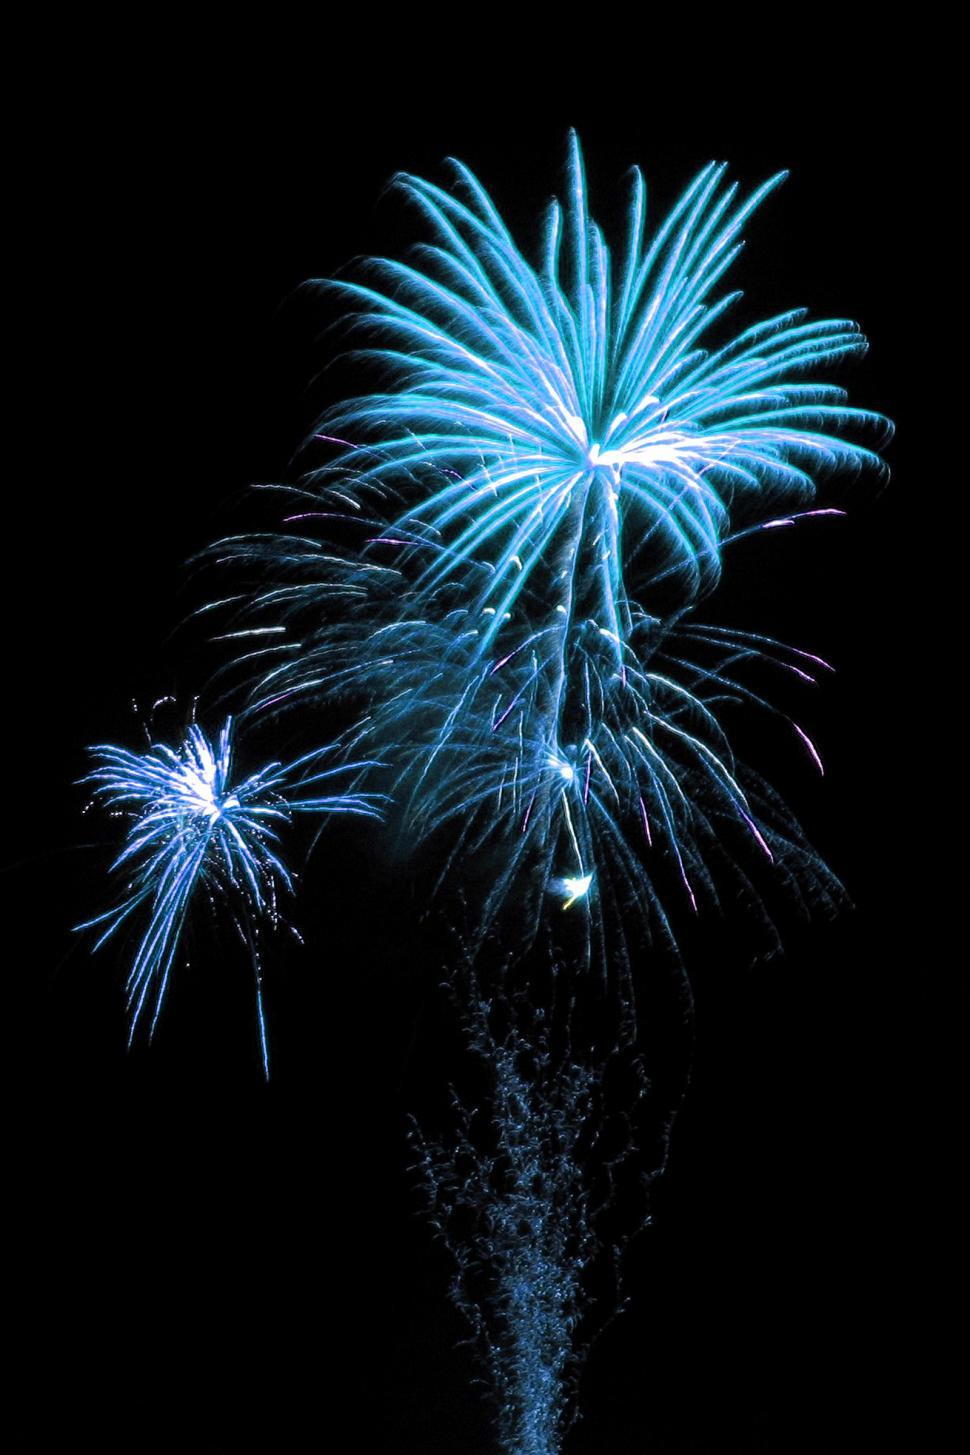 Free Image of Fireworks 